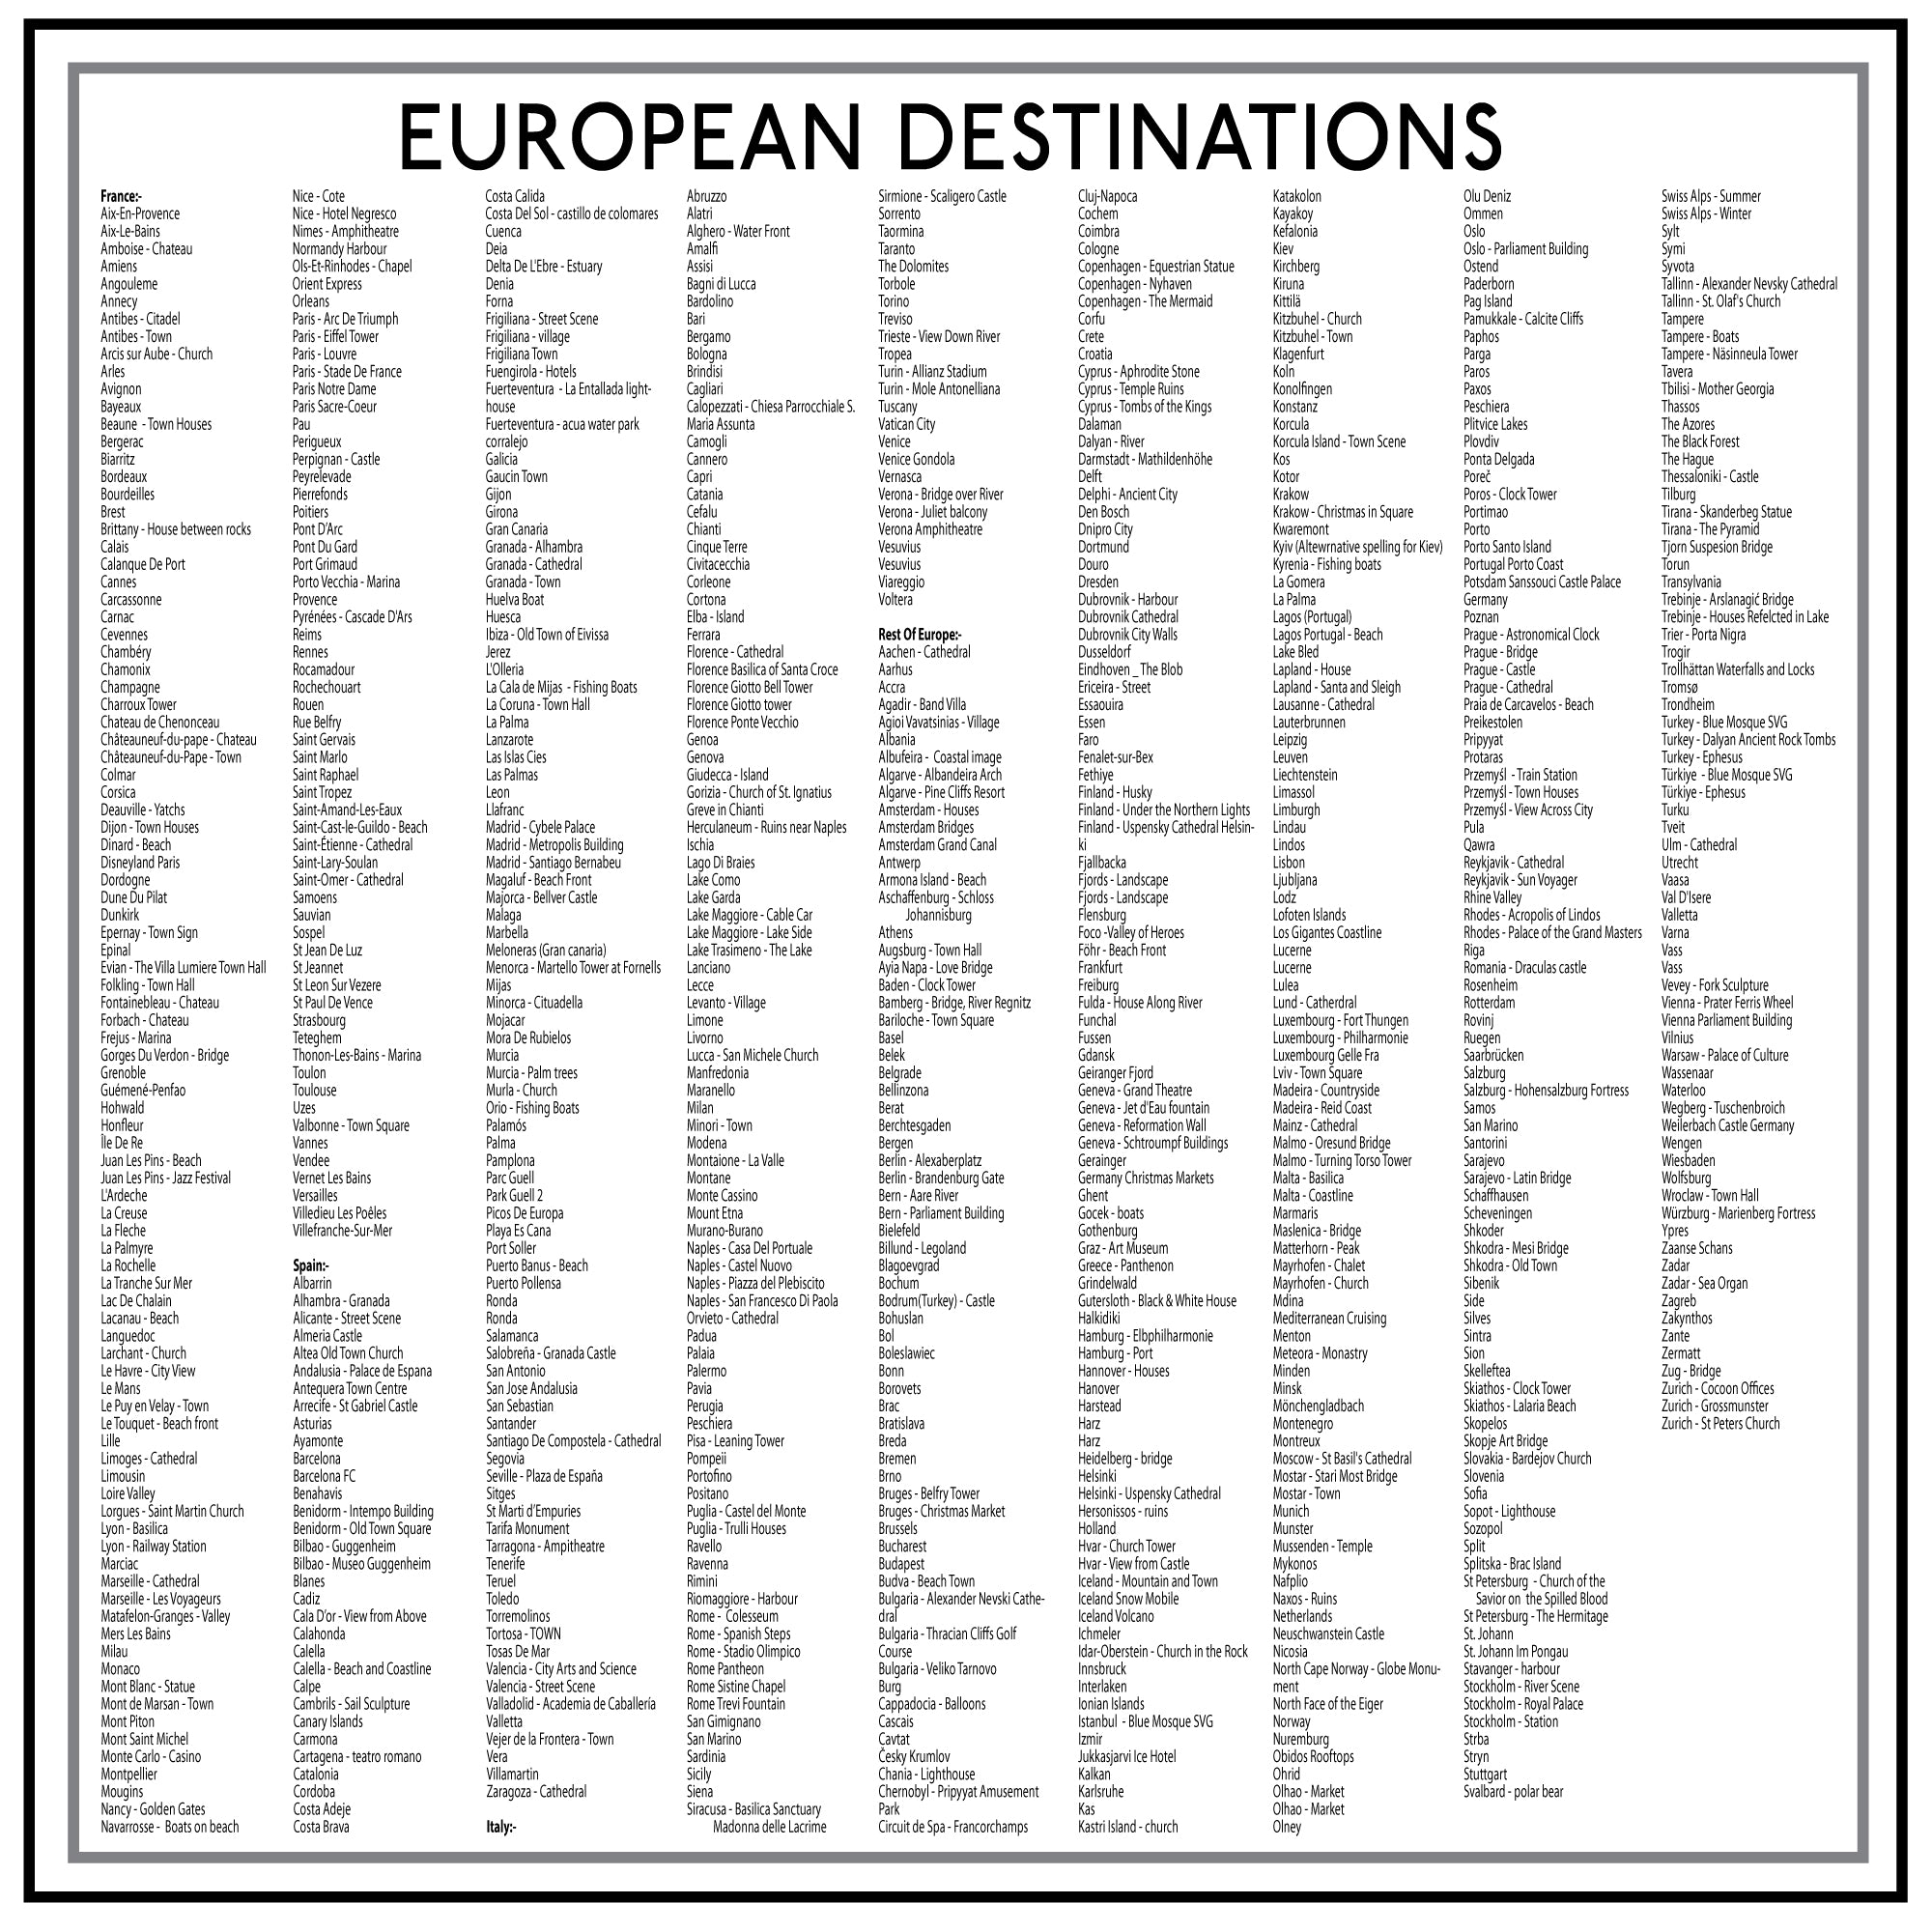 Image showing list of European Destinations